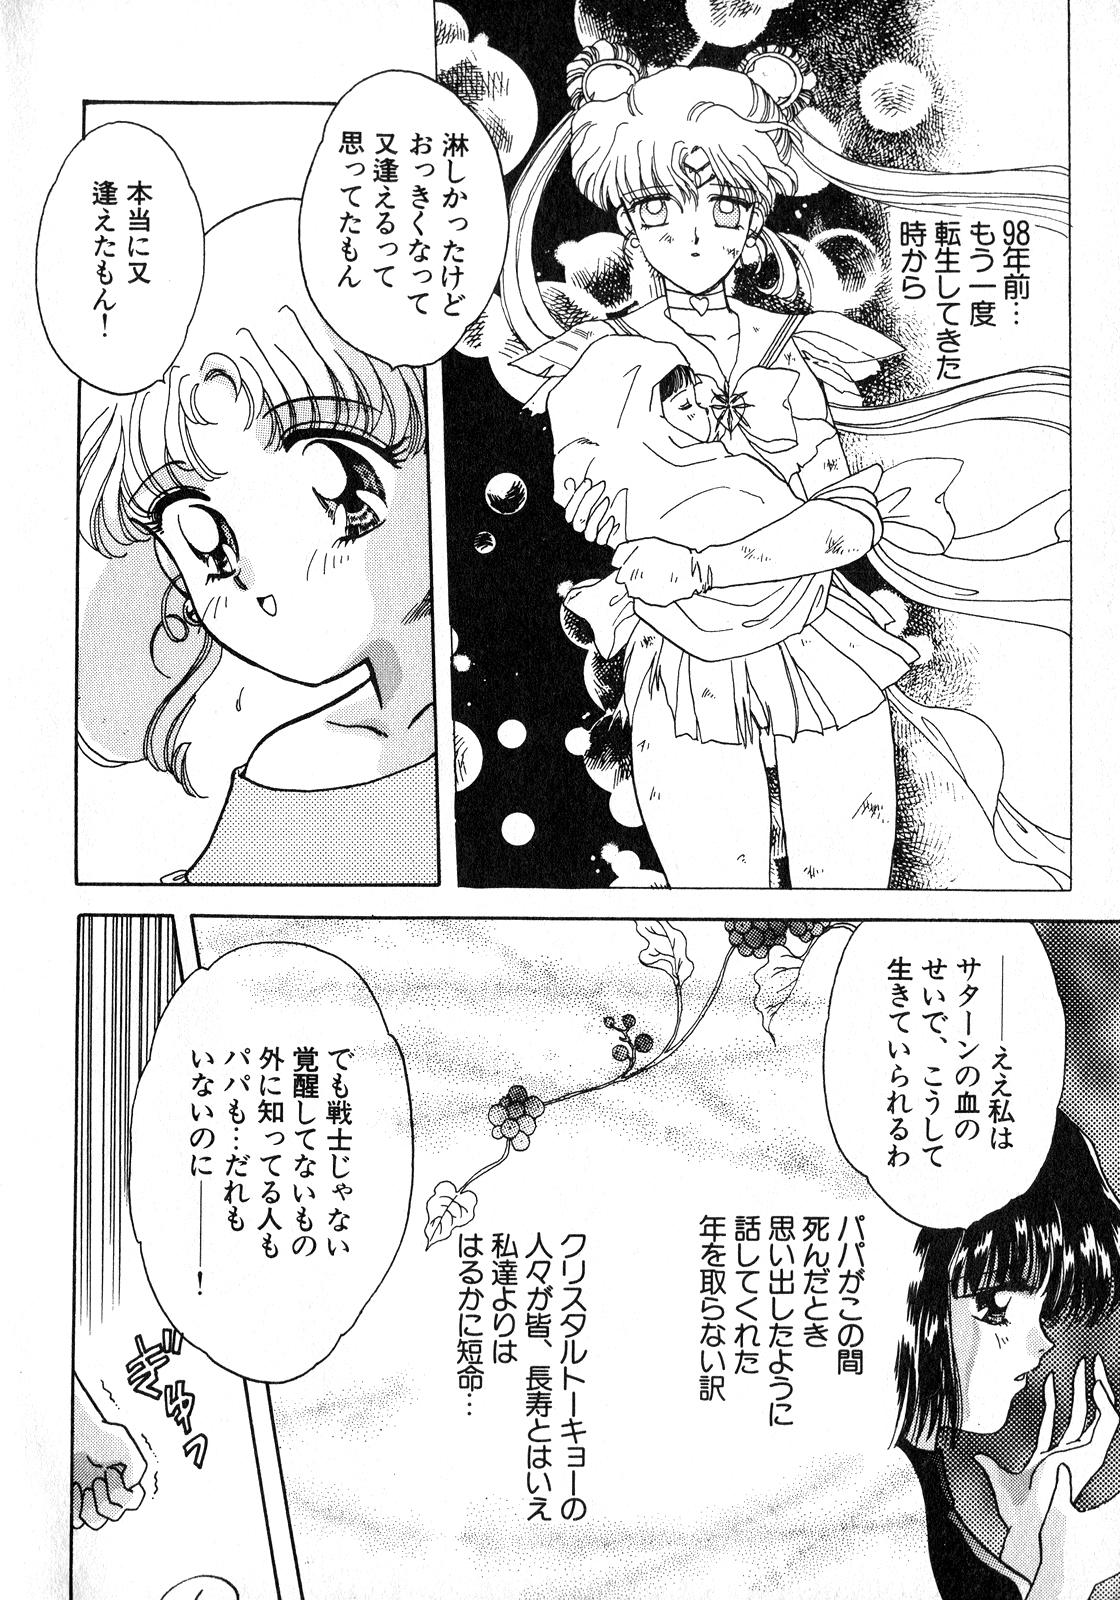 Latinos Lunatic Party 8 - Sailor moon Morocha - Page 7